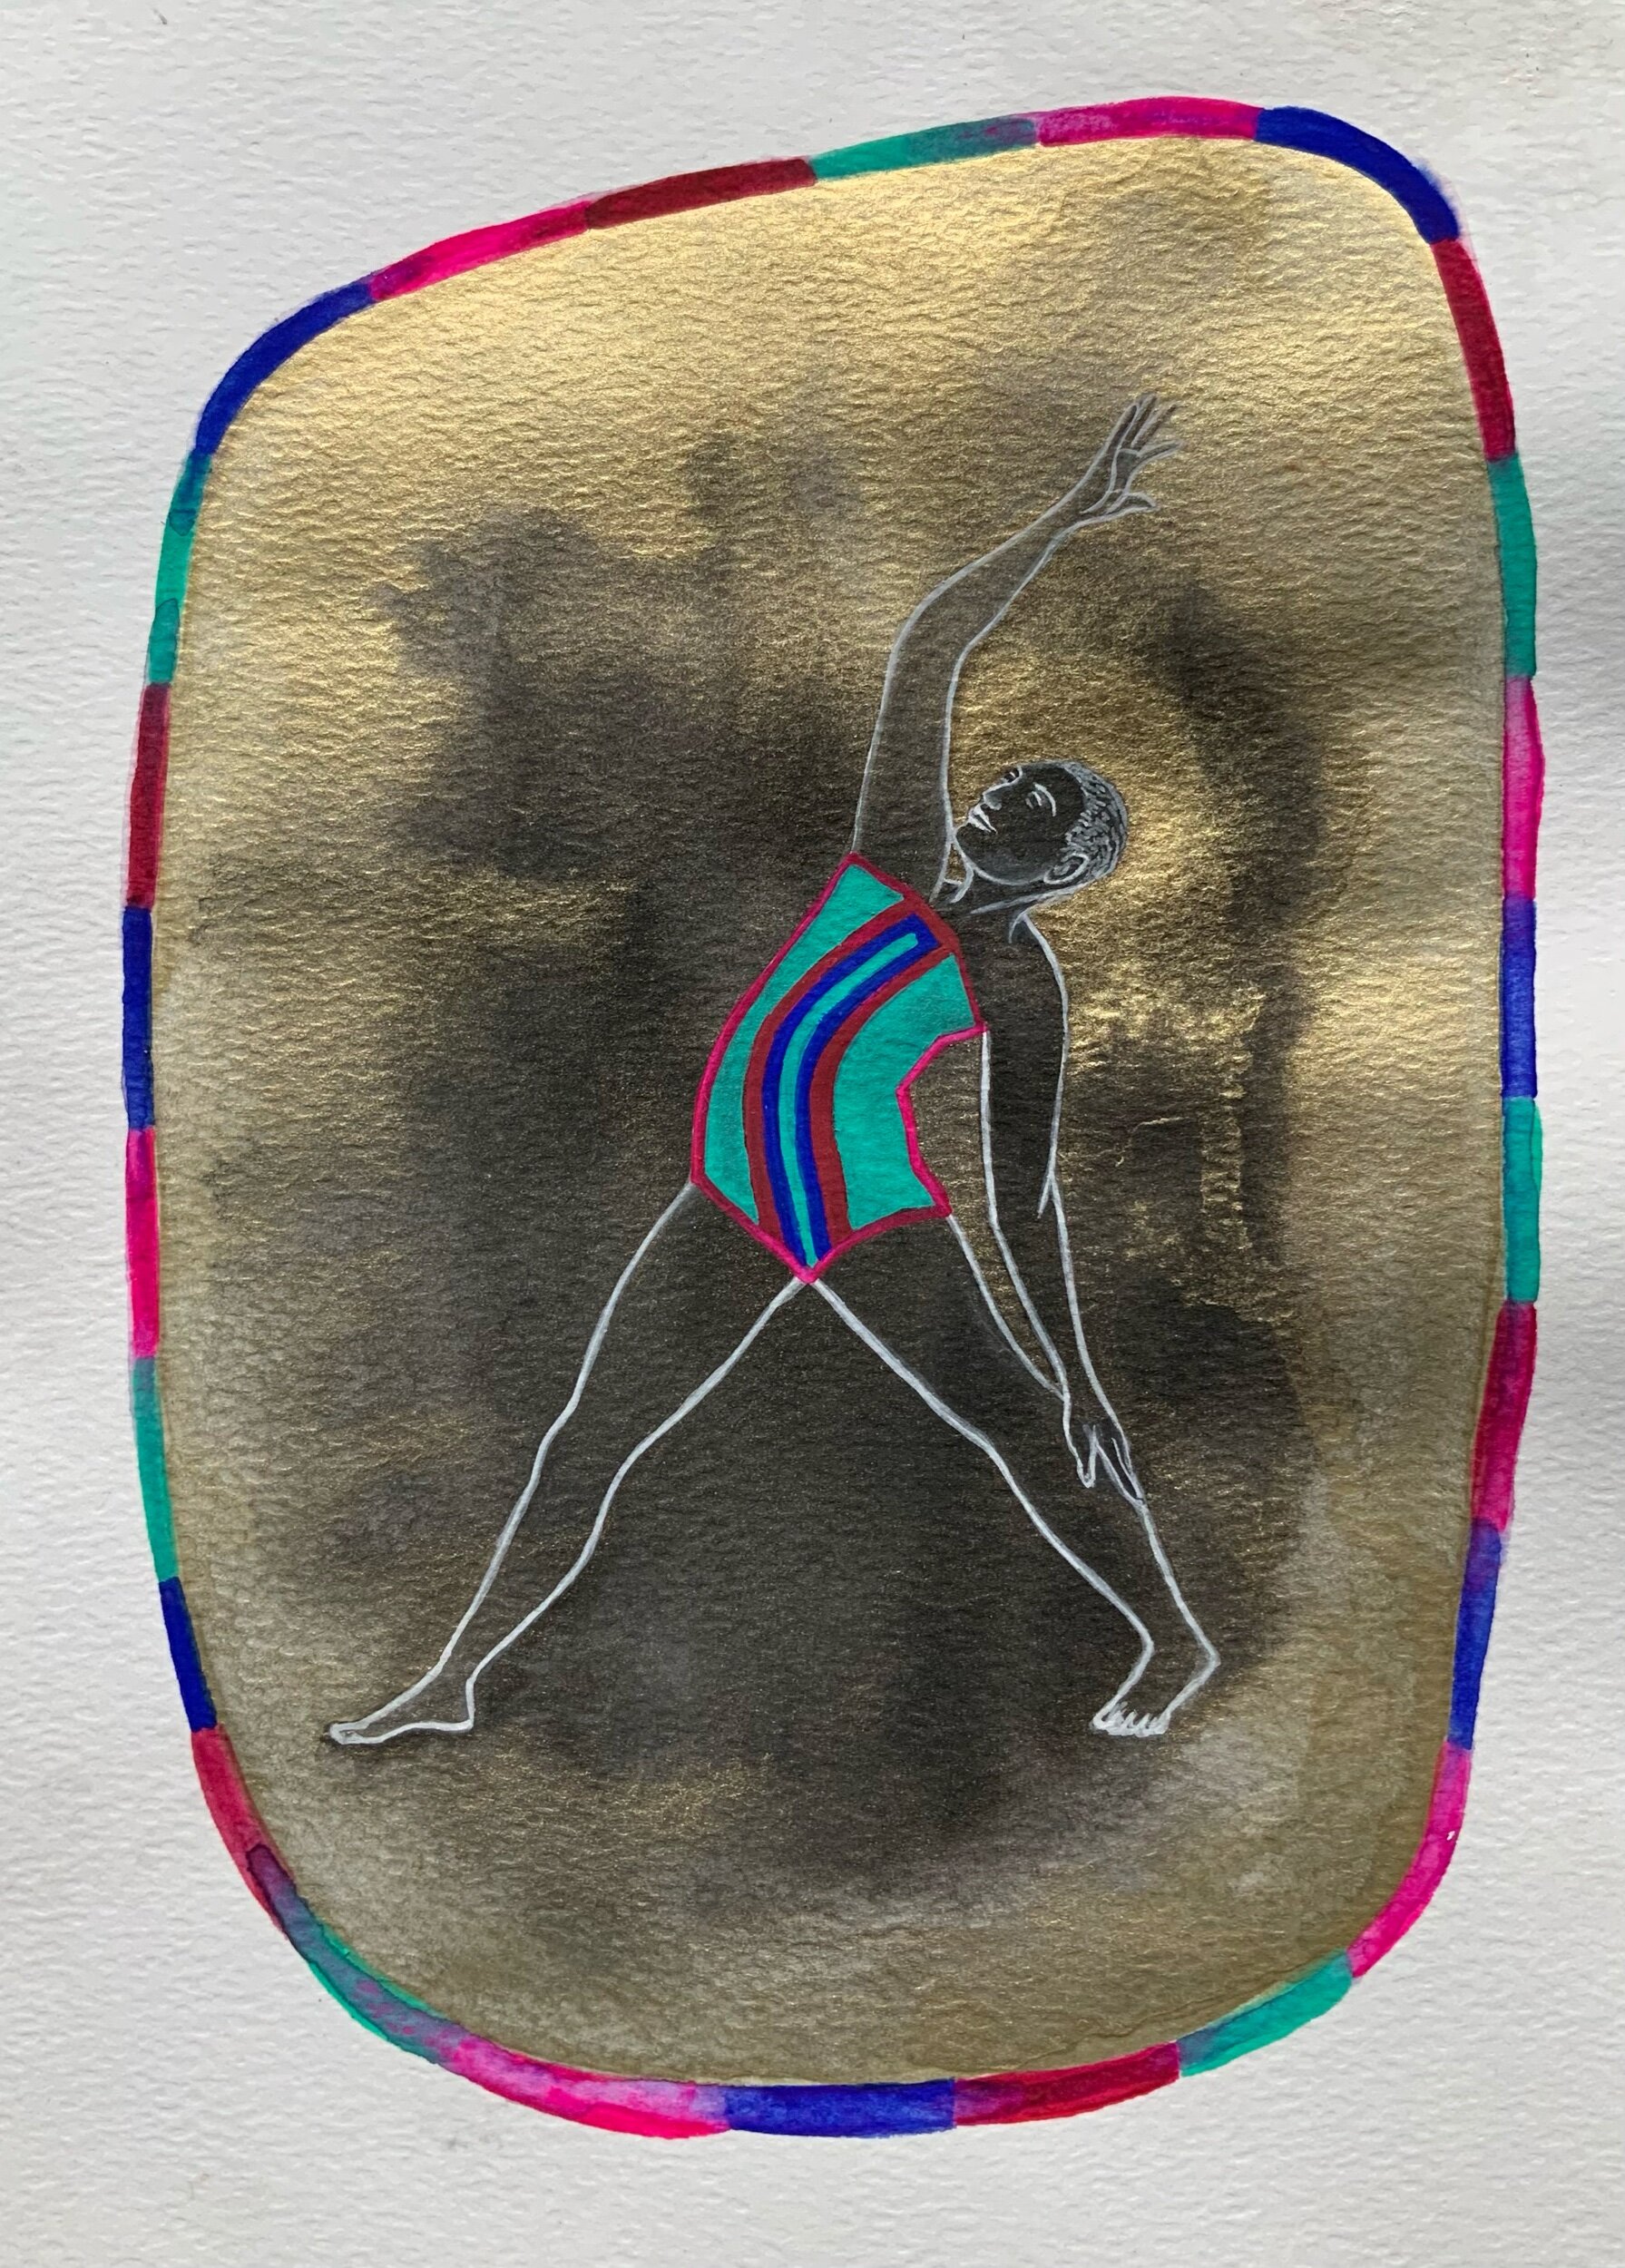   Golden warrior  , 2020  Gouache and iridescent watercolour on paper  21 x 30 cm 